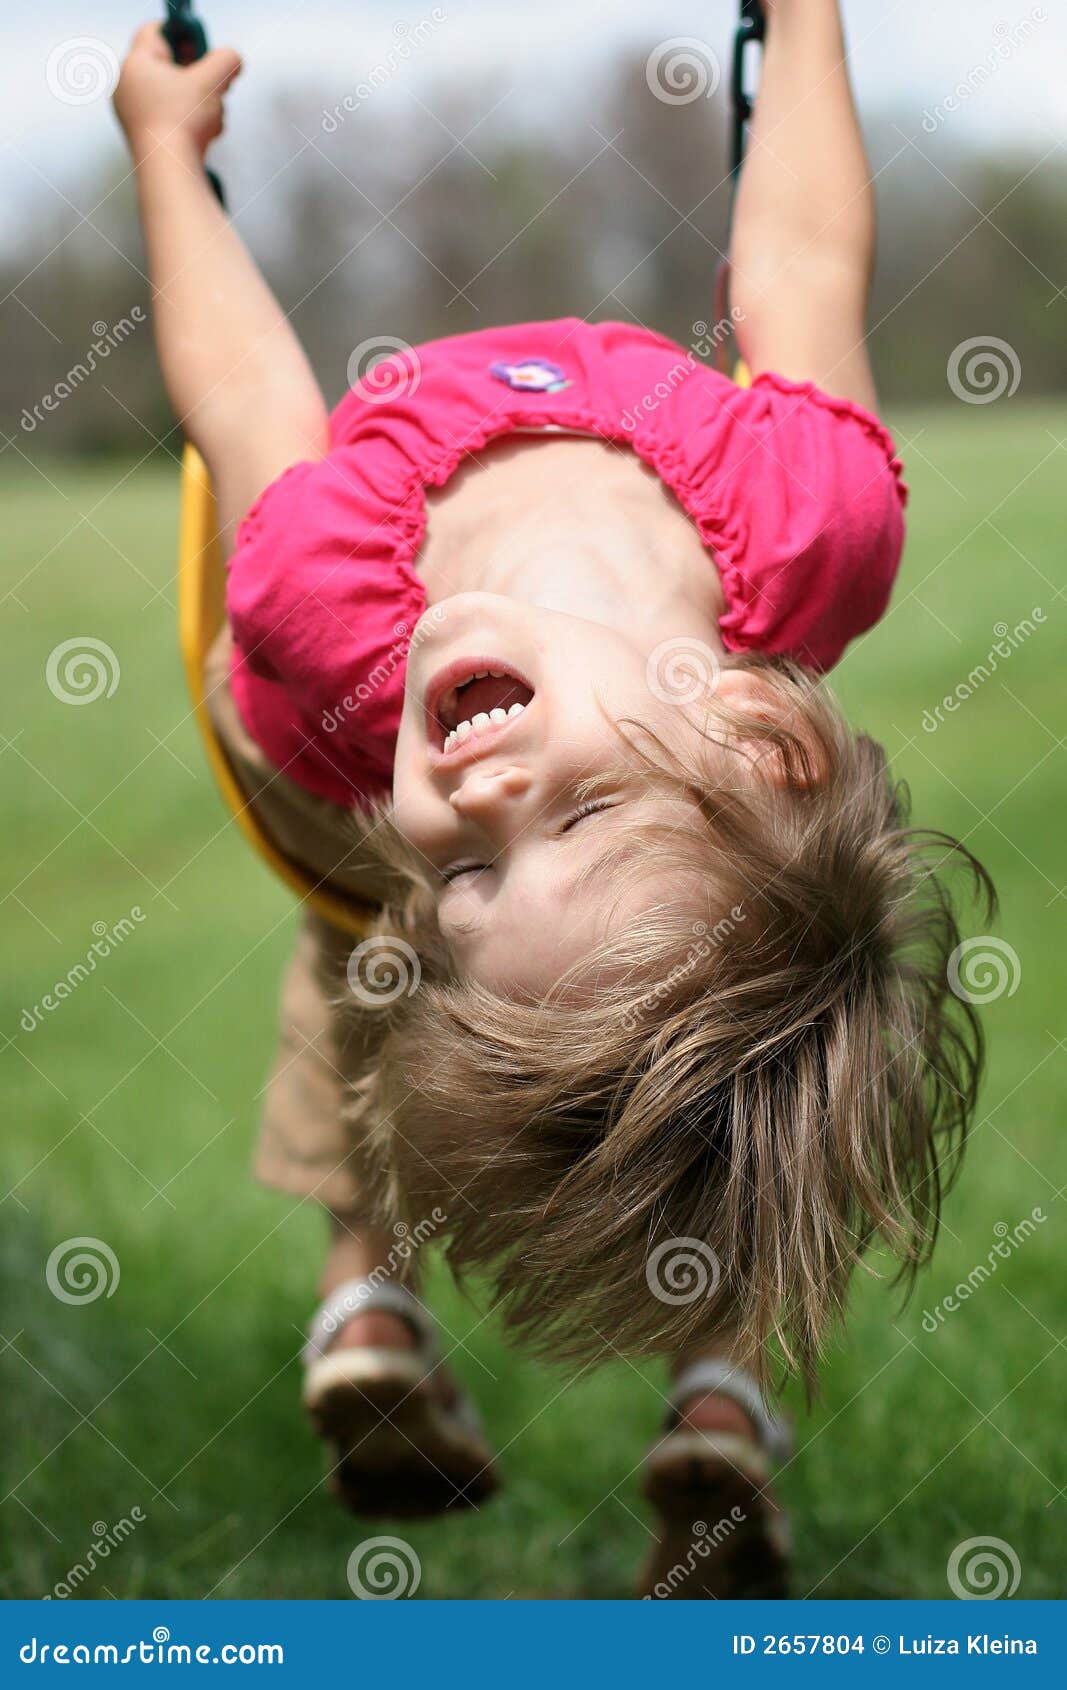 A girl on a swing stock photo. Image of swing, backyard - 2657804